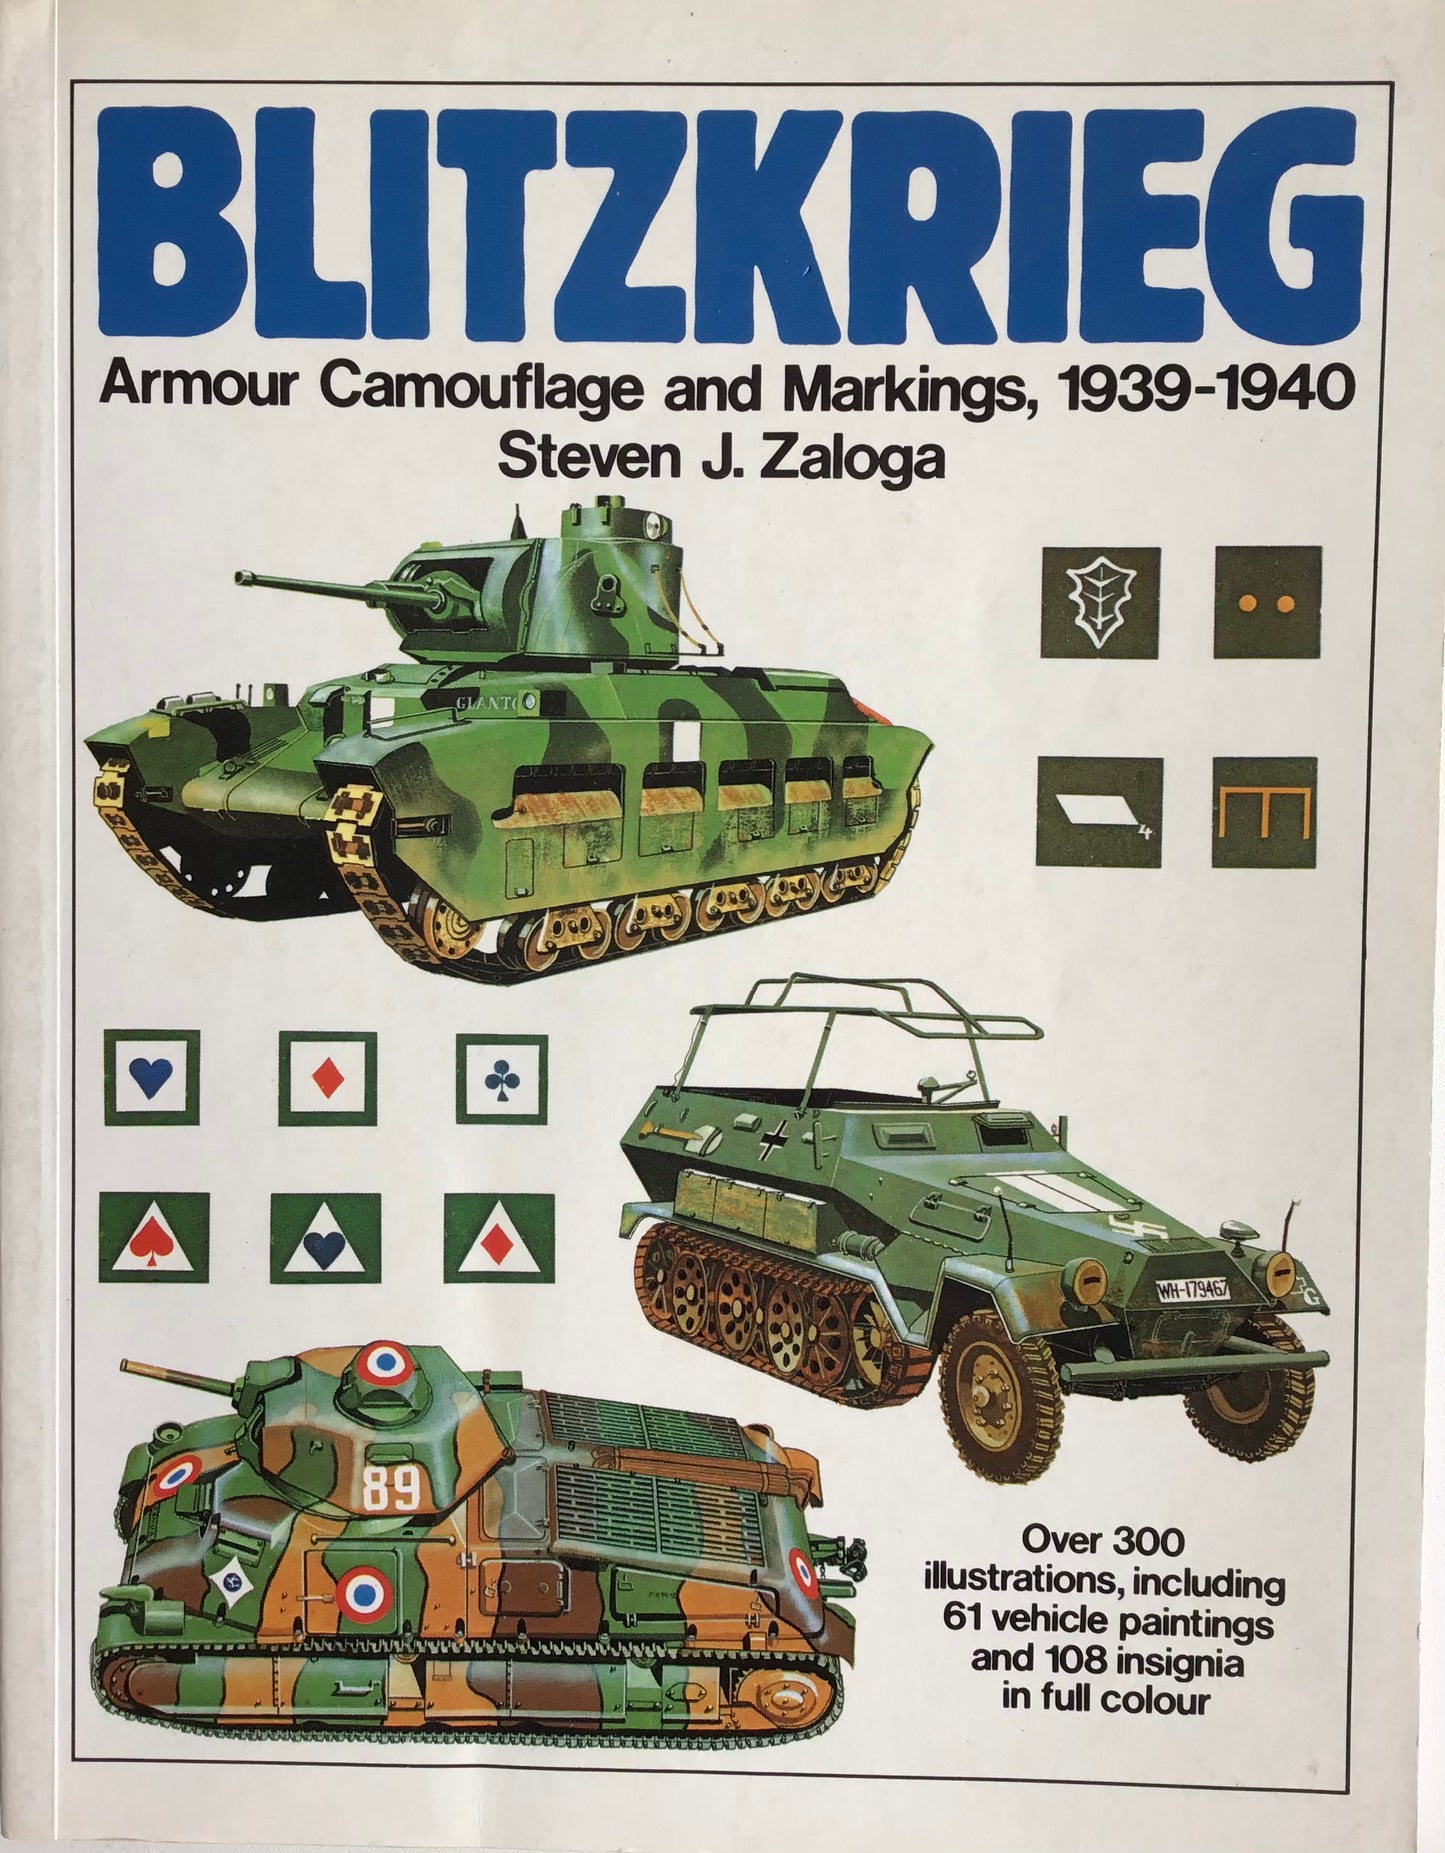 Blitzkrieg armour and camouflage Markings, 1939 - 1940 - Steven J. Zaloga - Chester Model Centre